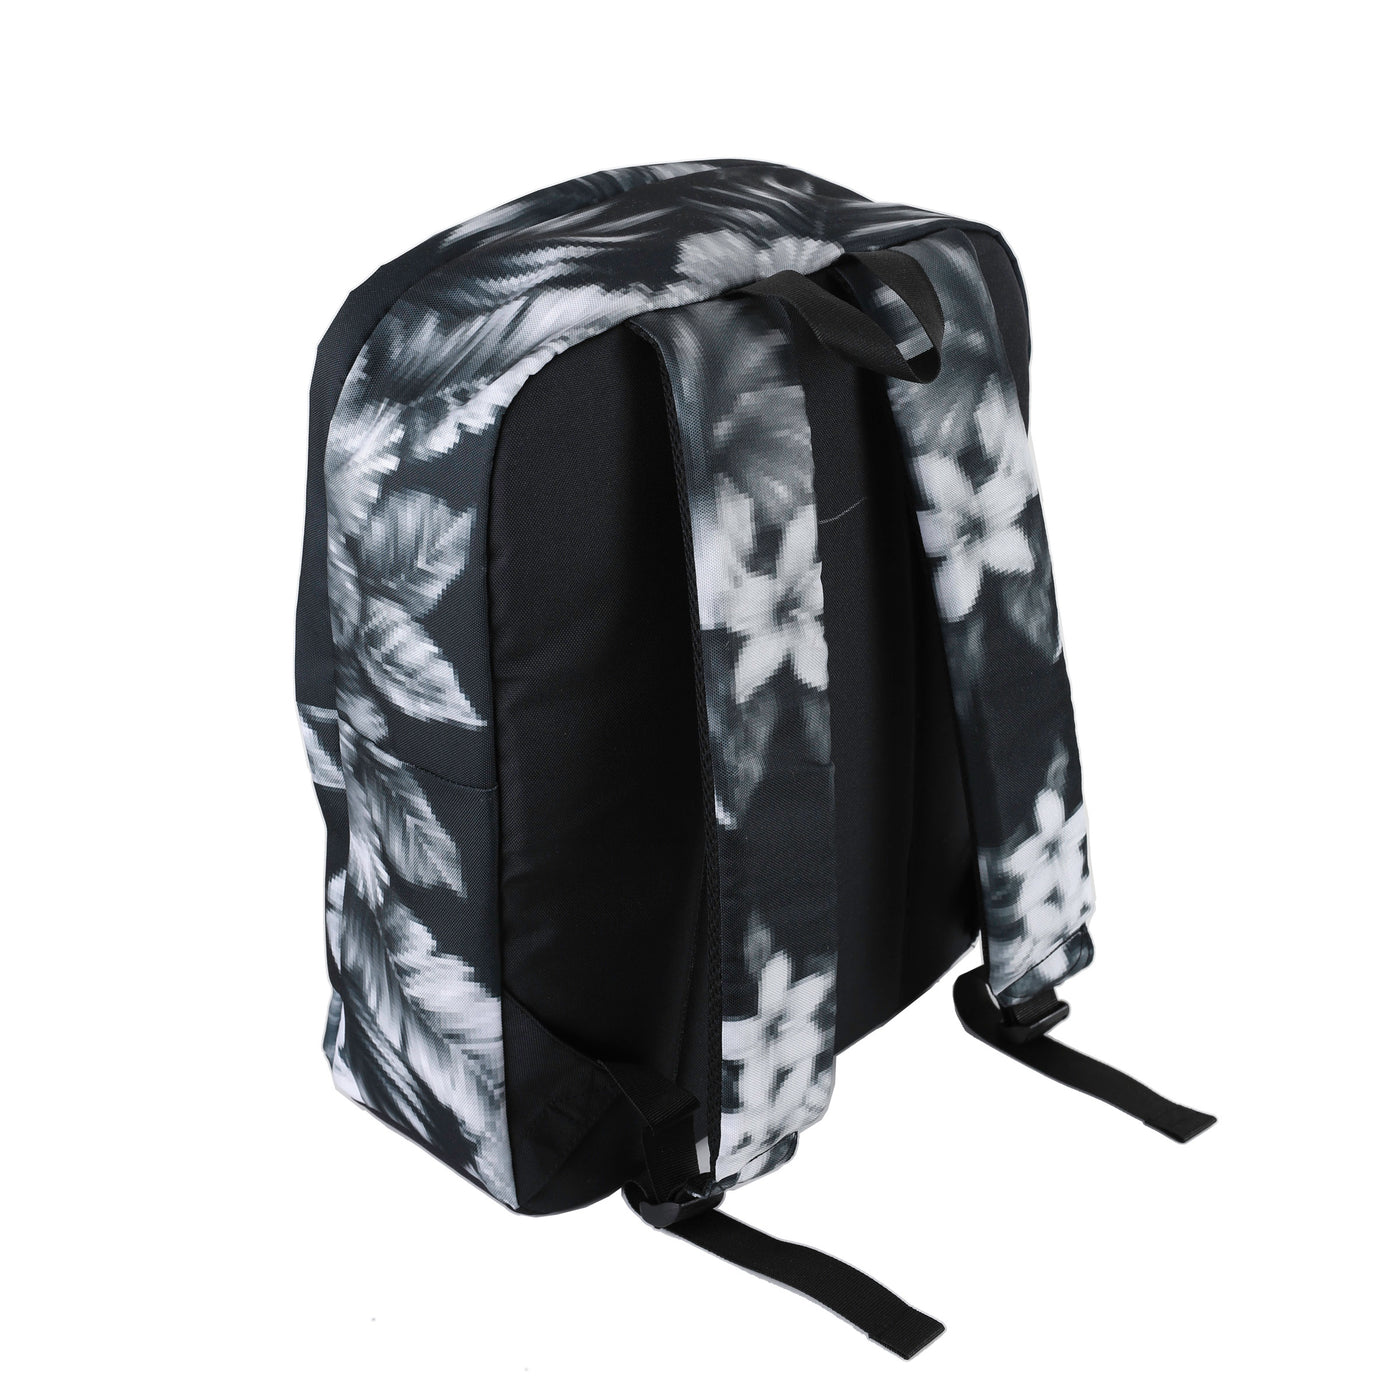 Tropic Blur Travel Backpack